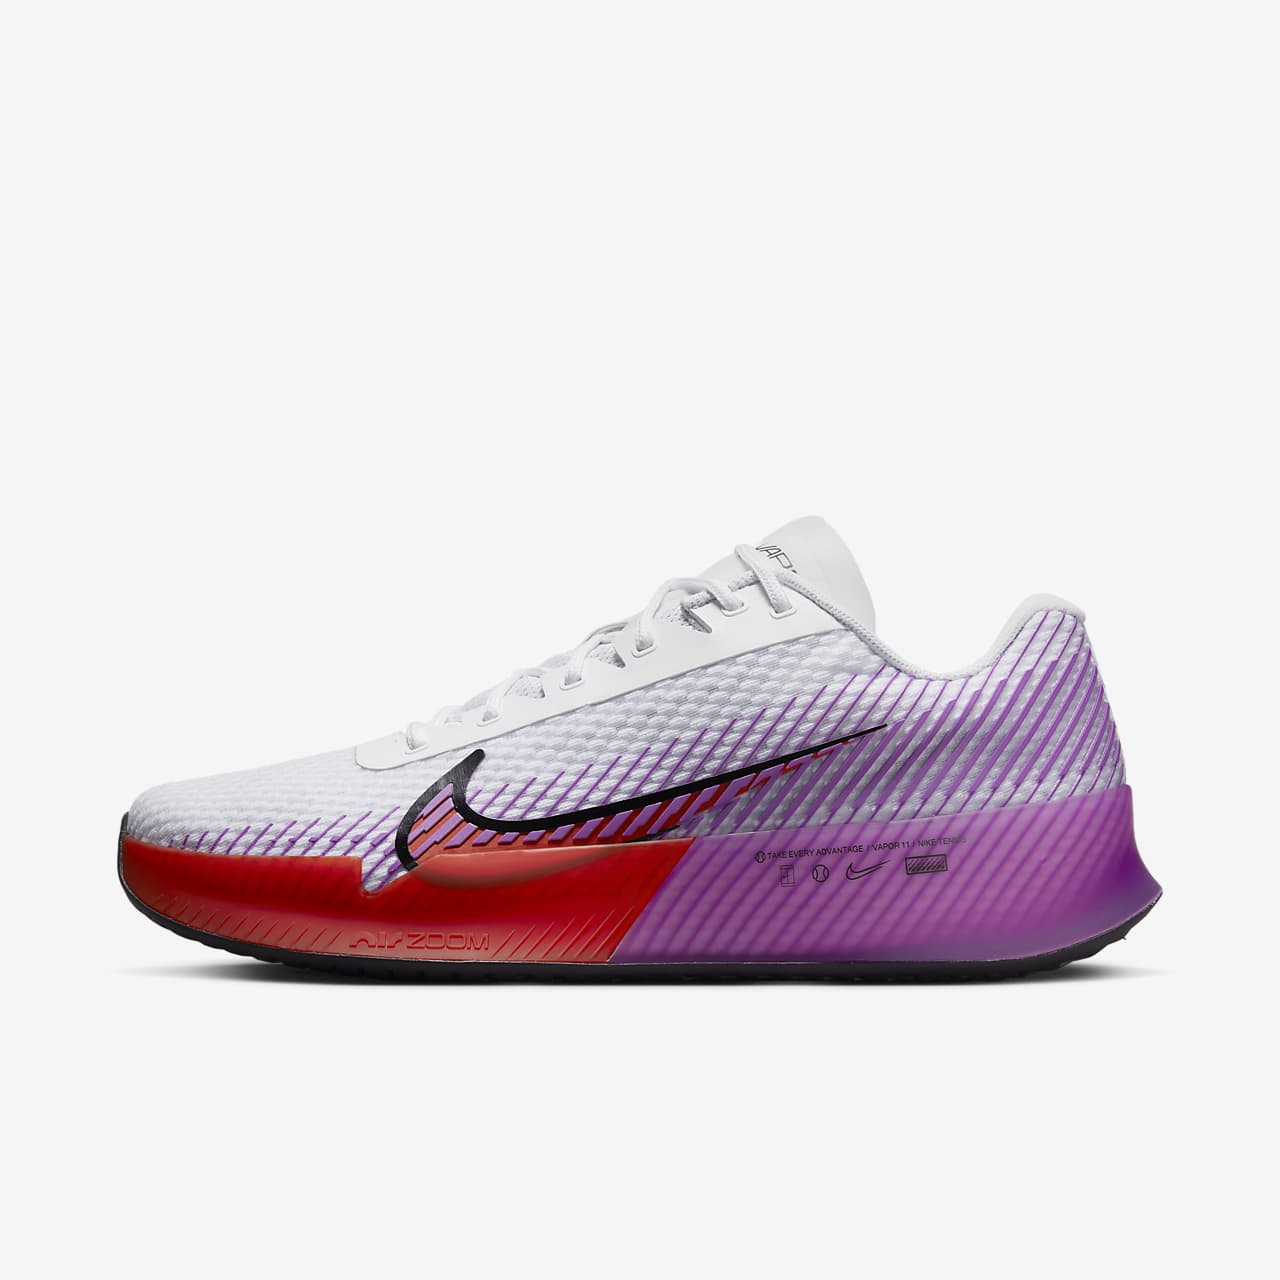 NikeCourt Air Zoom Vapor 11 男款硬地球場網球鞋